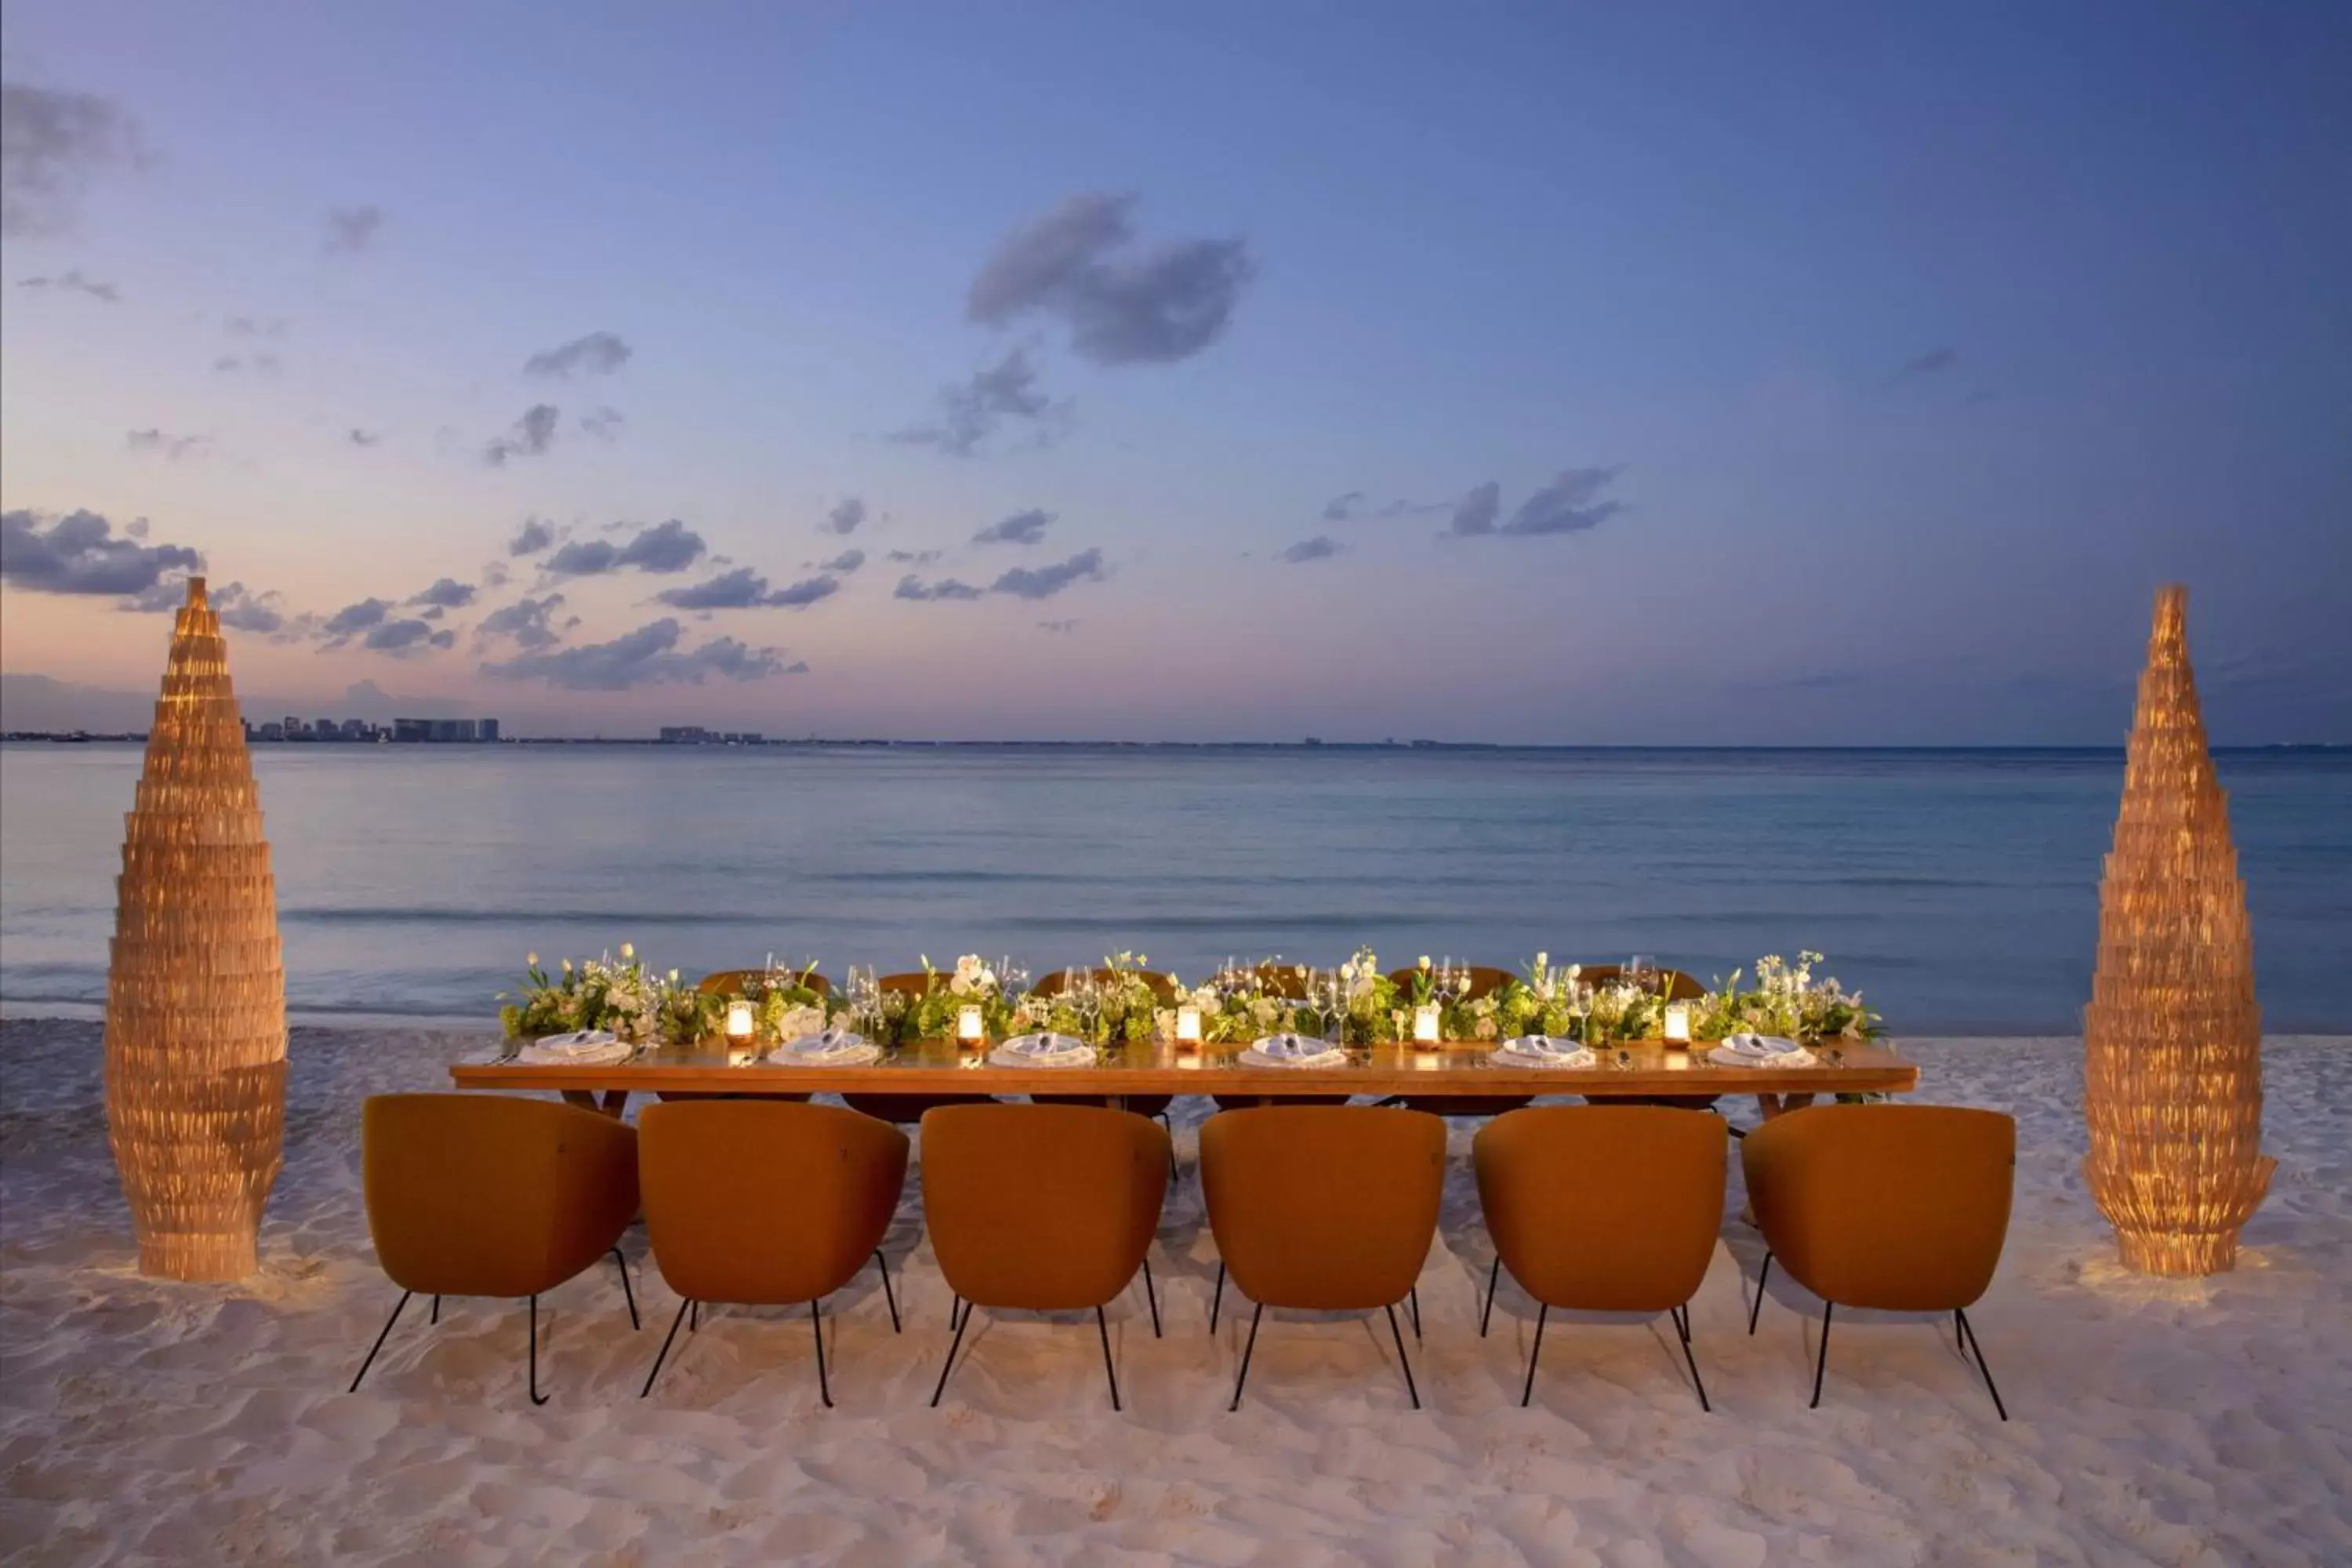 Sea view in Dreams Sands Cancun Resort & Spa